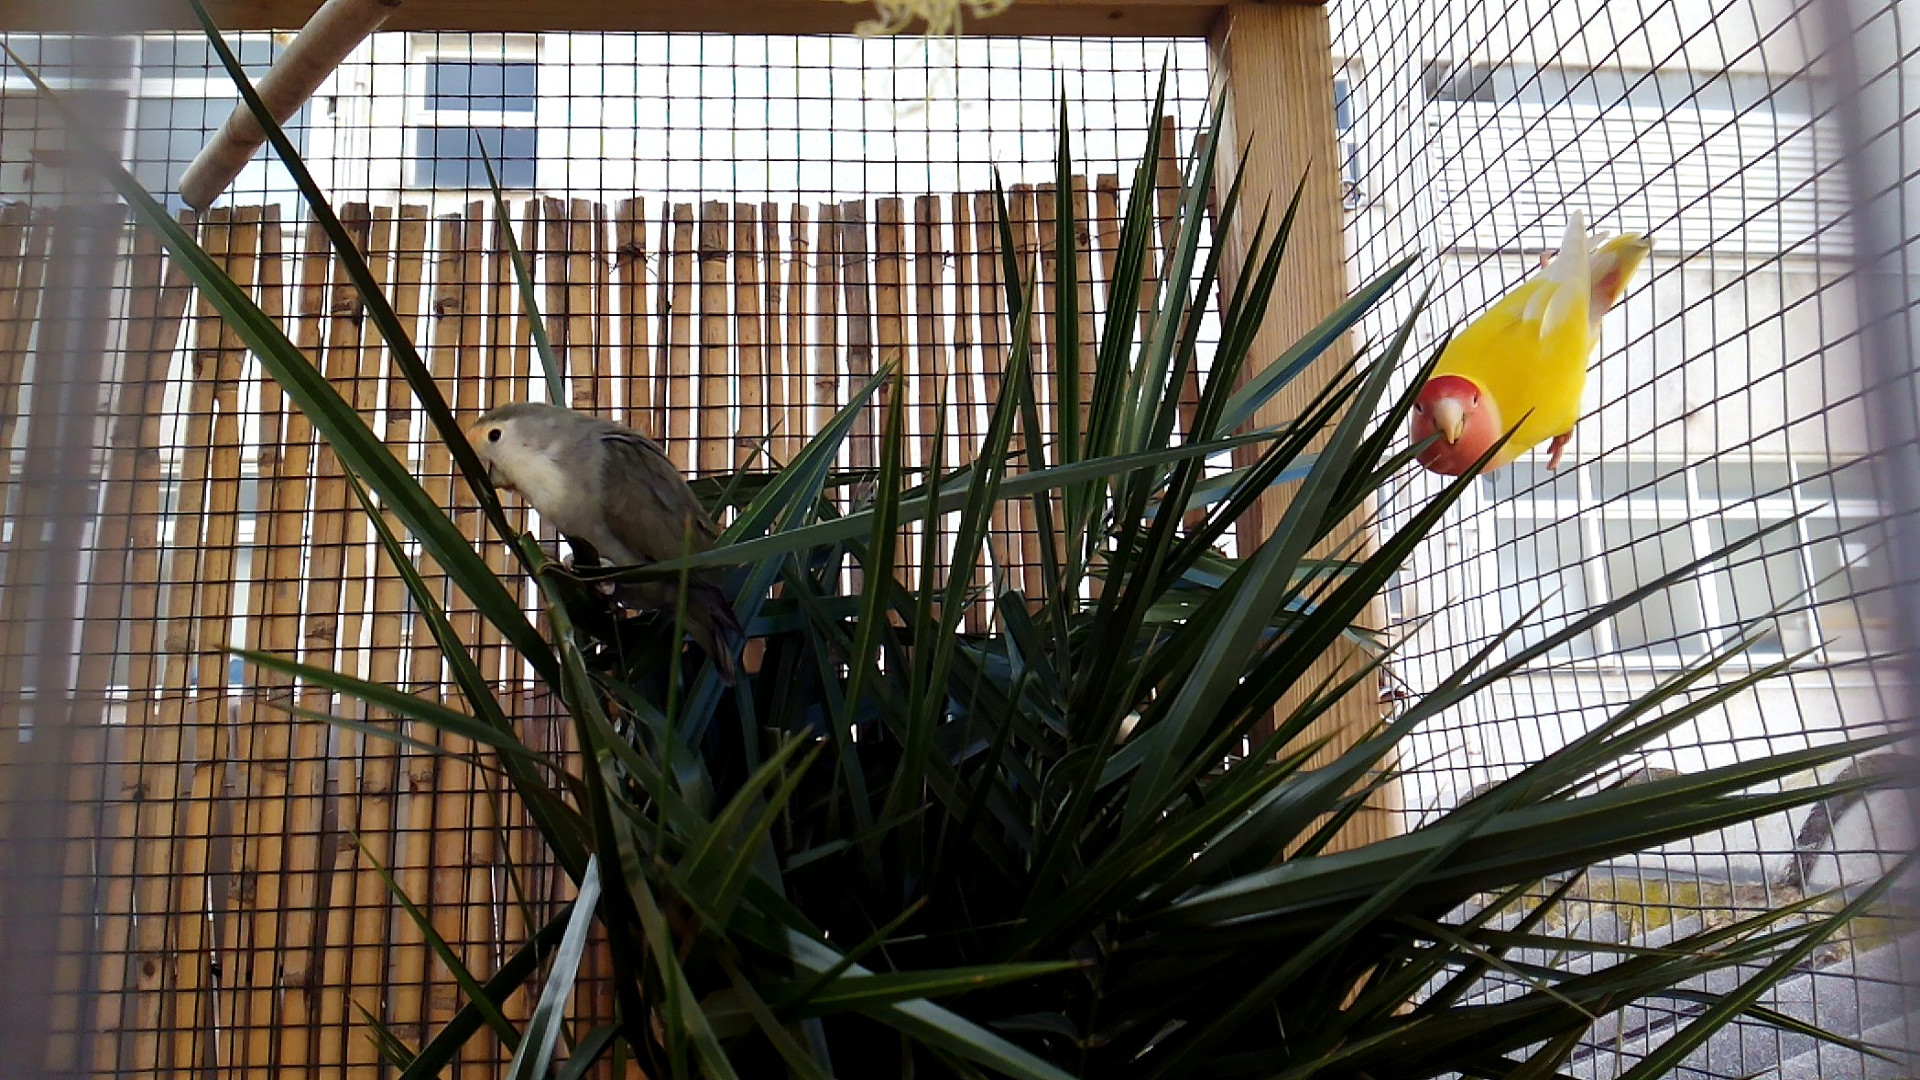 Imagen de kakarikis esos pequeños loritos australianos del aviario familiar de papilleros mallorca chulito.es